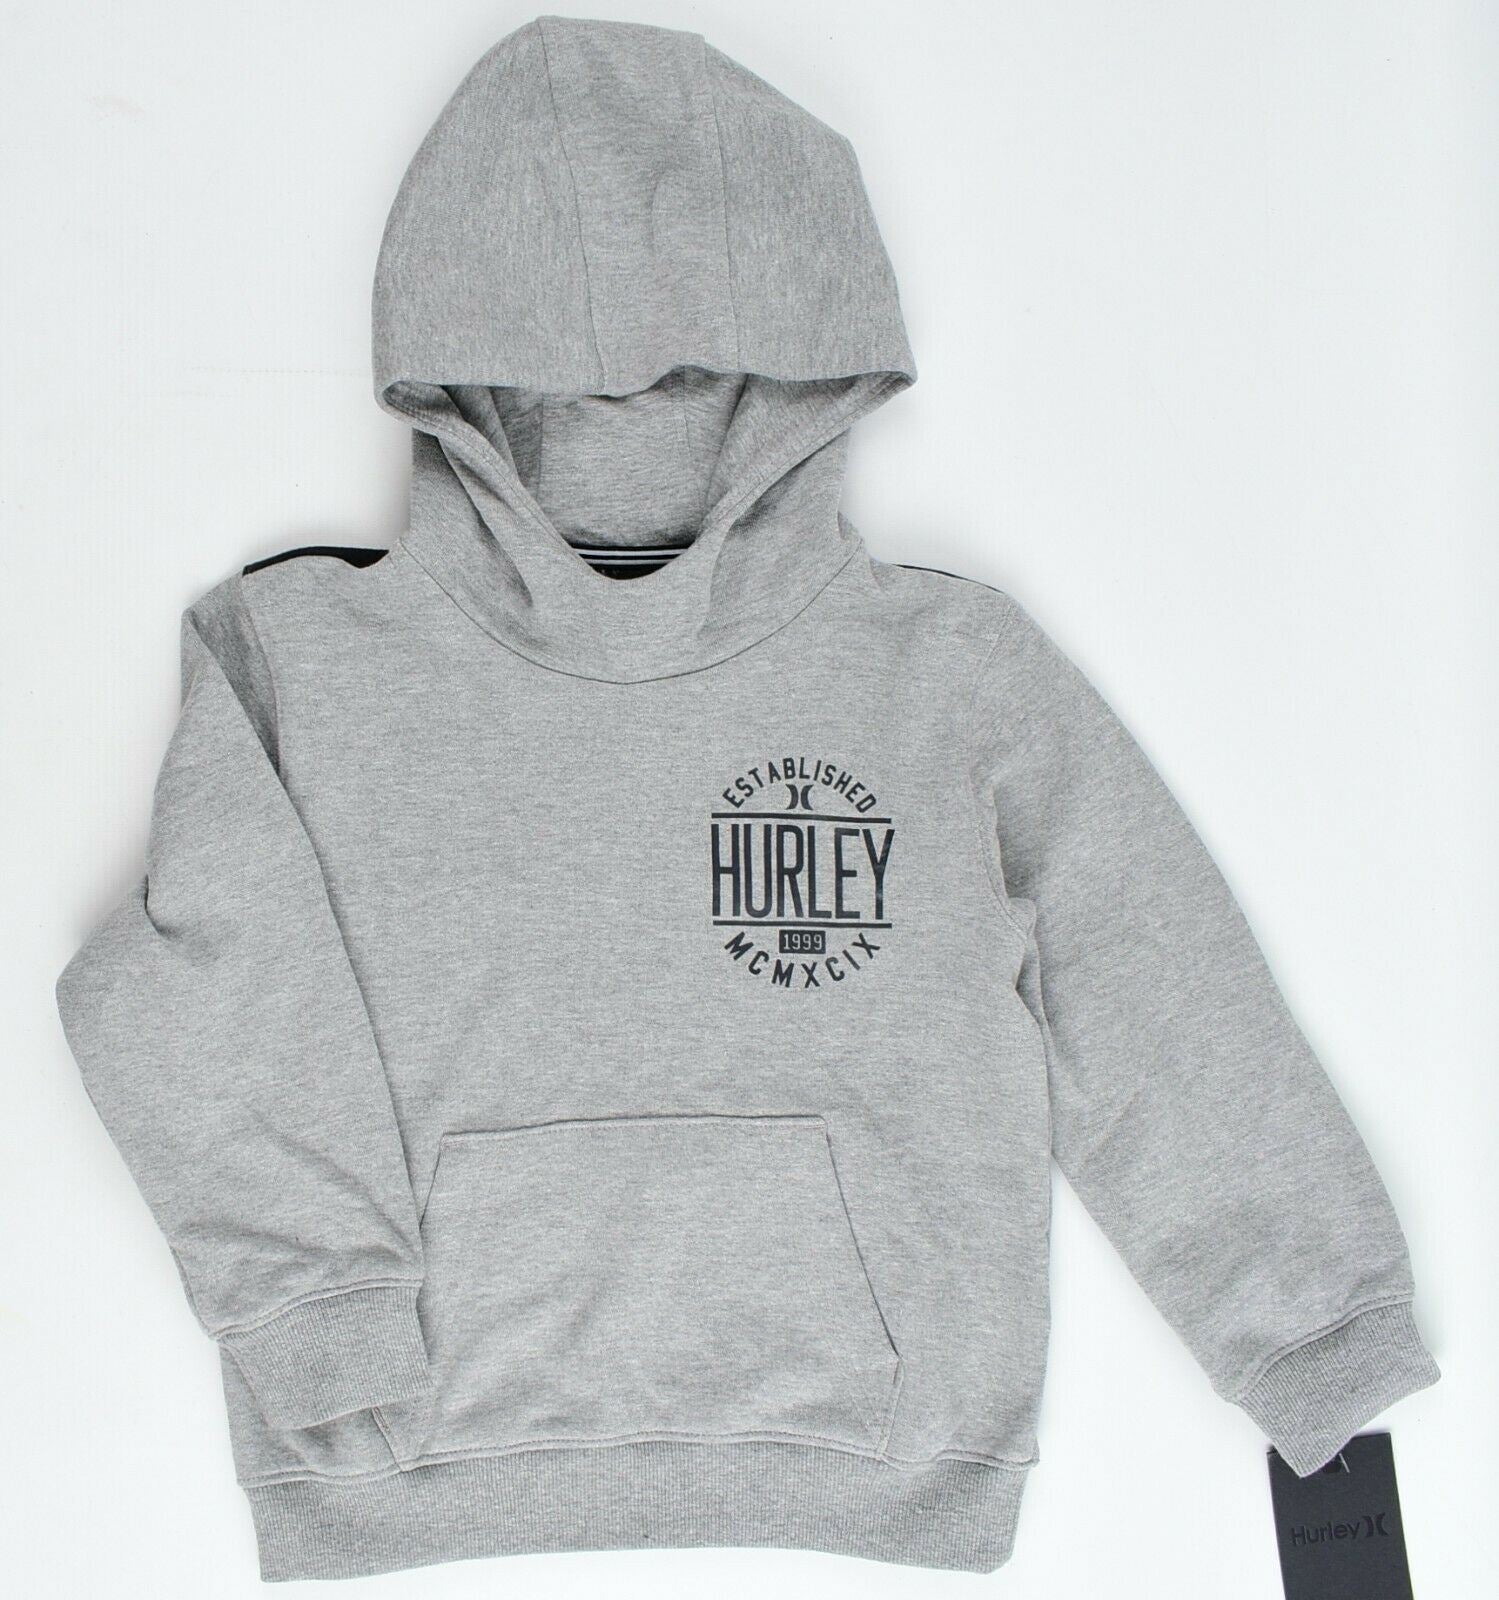 HURLEY Boys' Kids' Hooded Sweatshirt, Hoodie, Grey, size 6 years